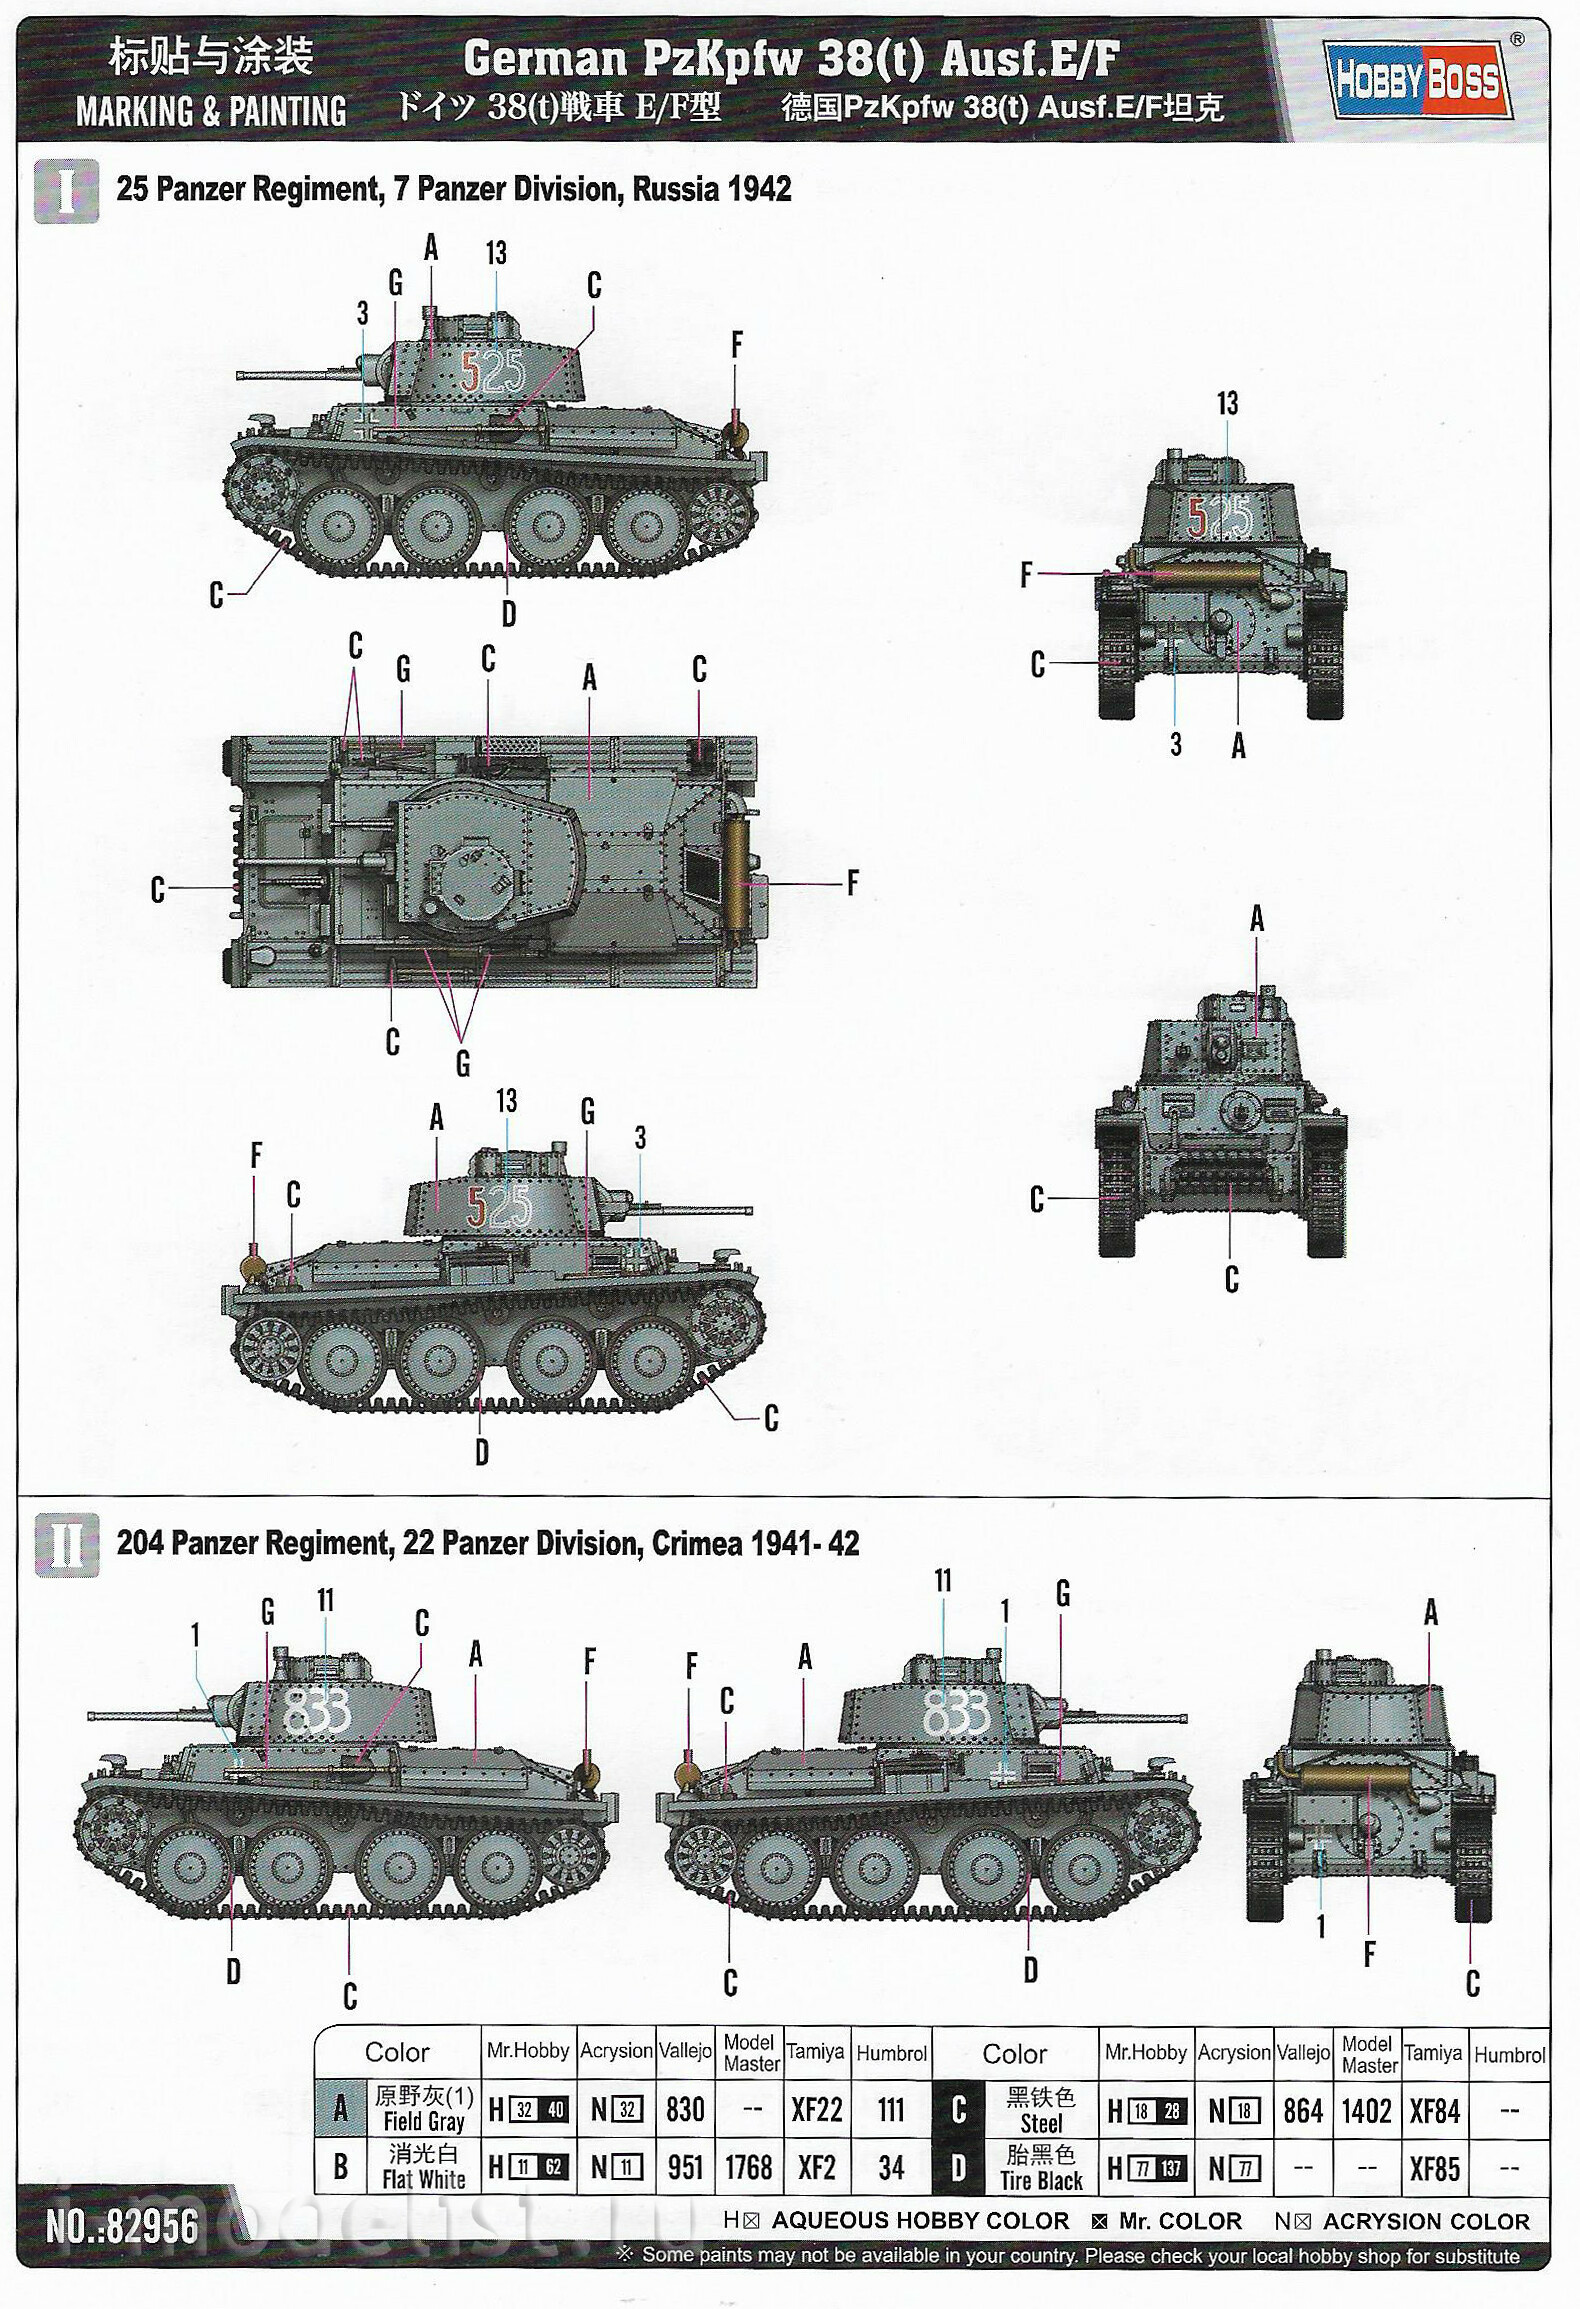 82956 HobbyBoss 1/72 German light tank PzKpfw 38(t) Ausf.E/F.